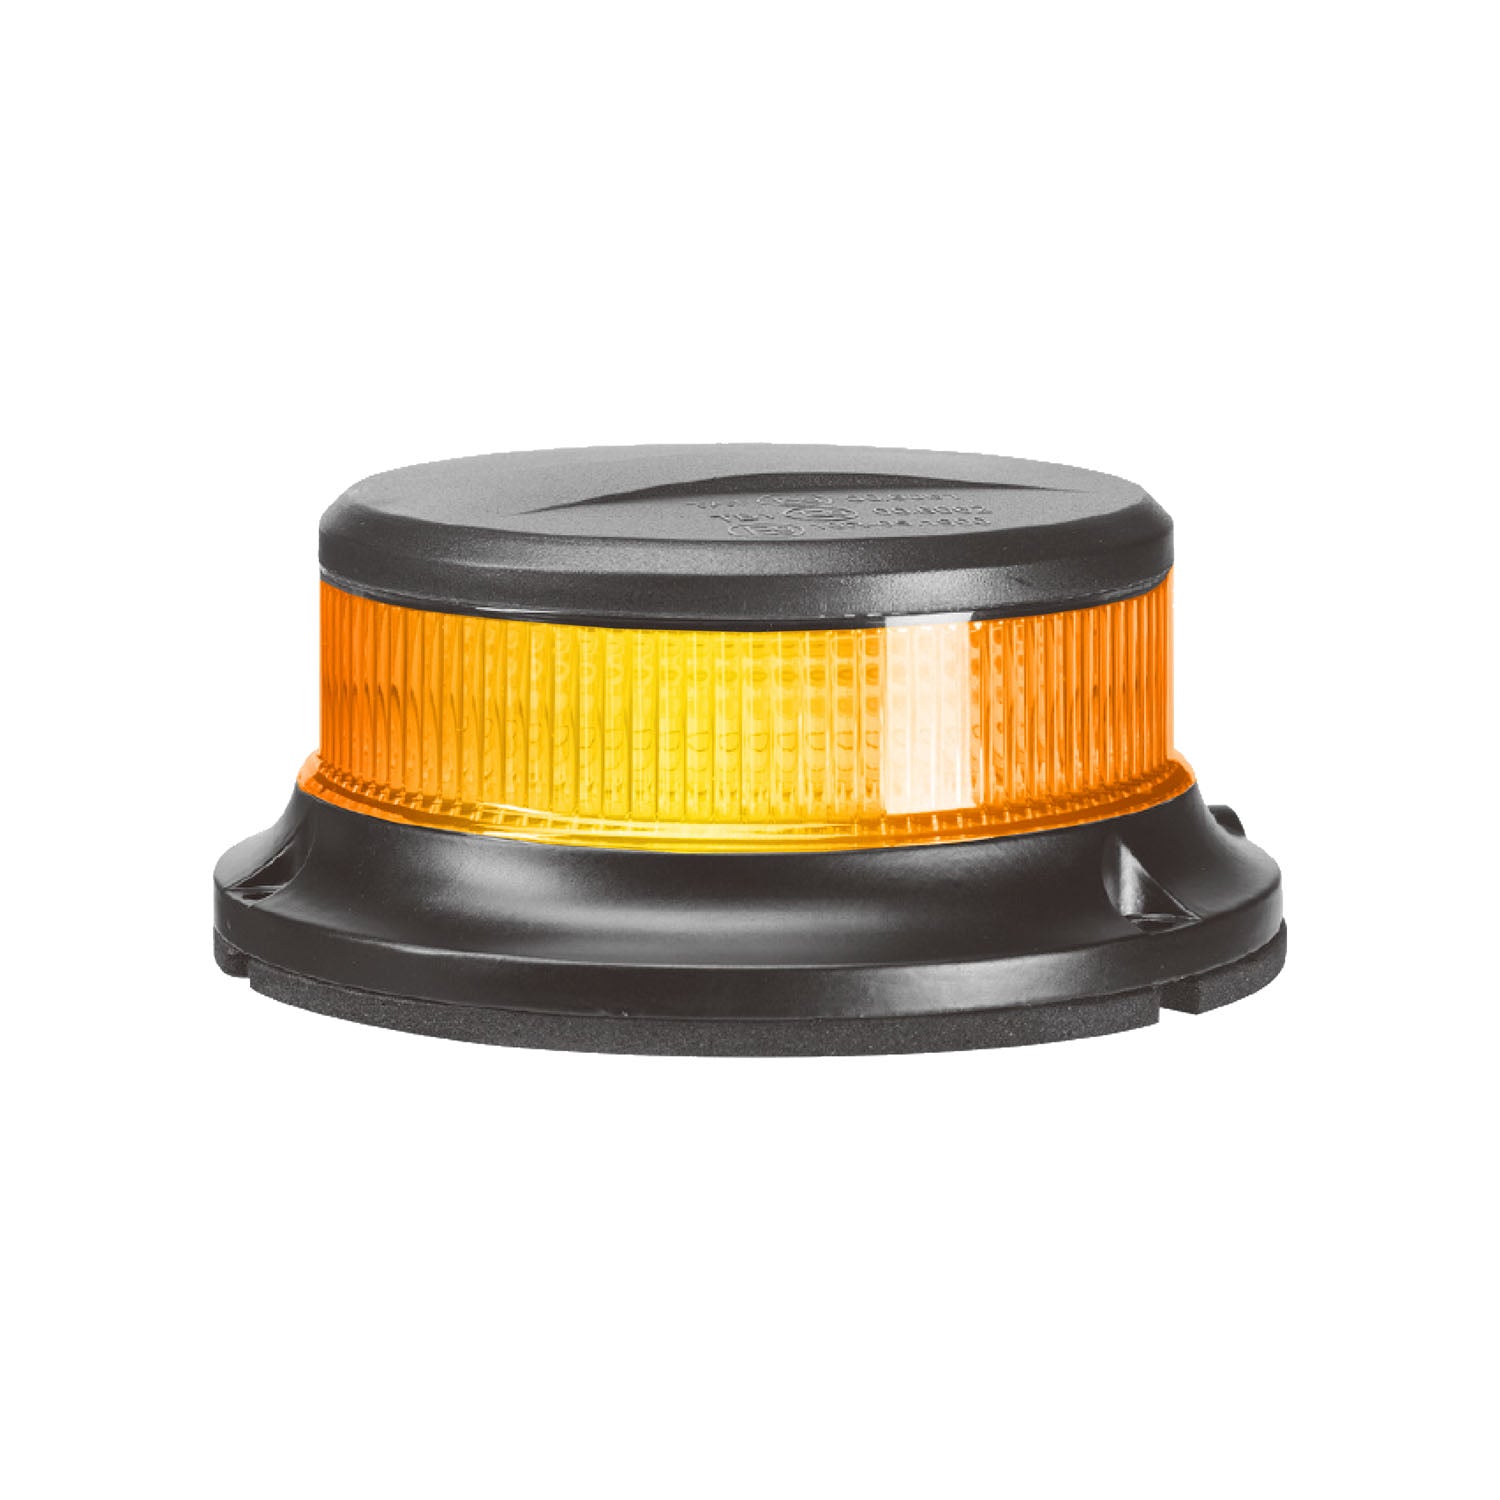 Ultra-Slim Class 1 LED Beacon, Amber